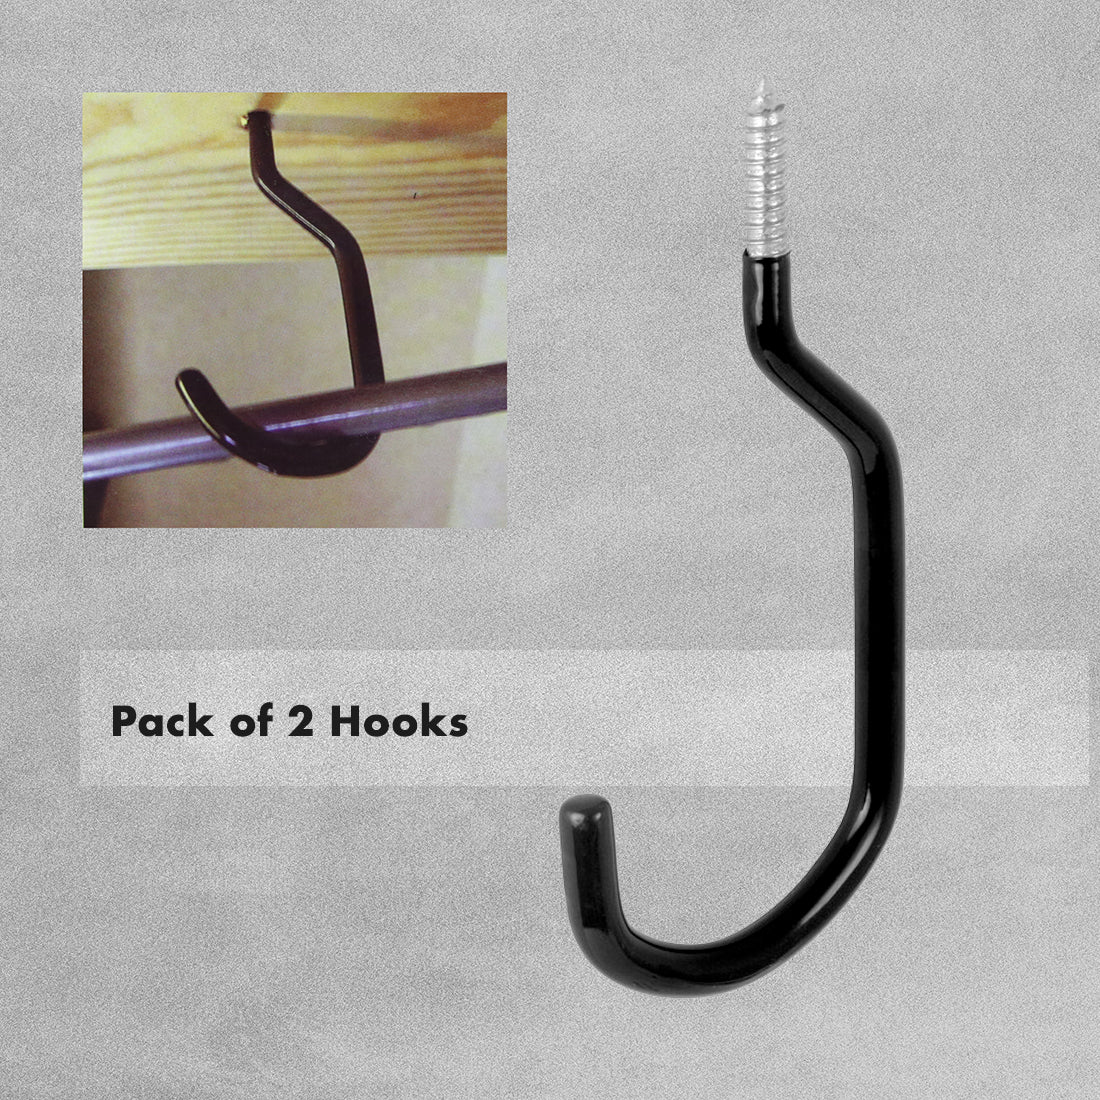 Screw in Ceiling Hooks - Pack of 2